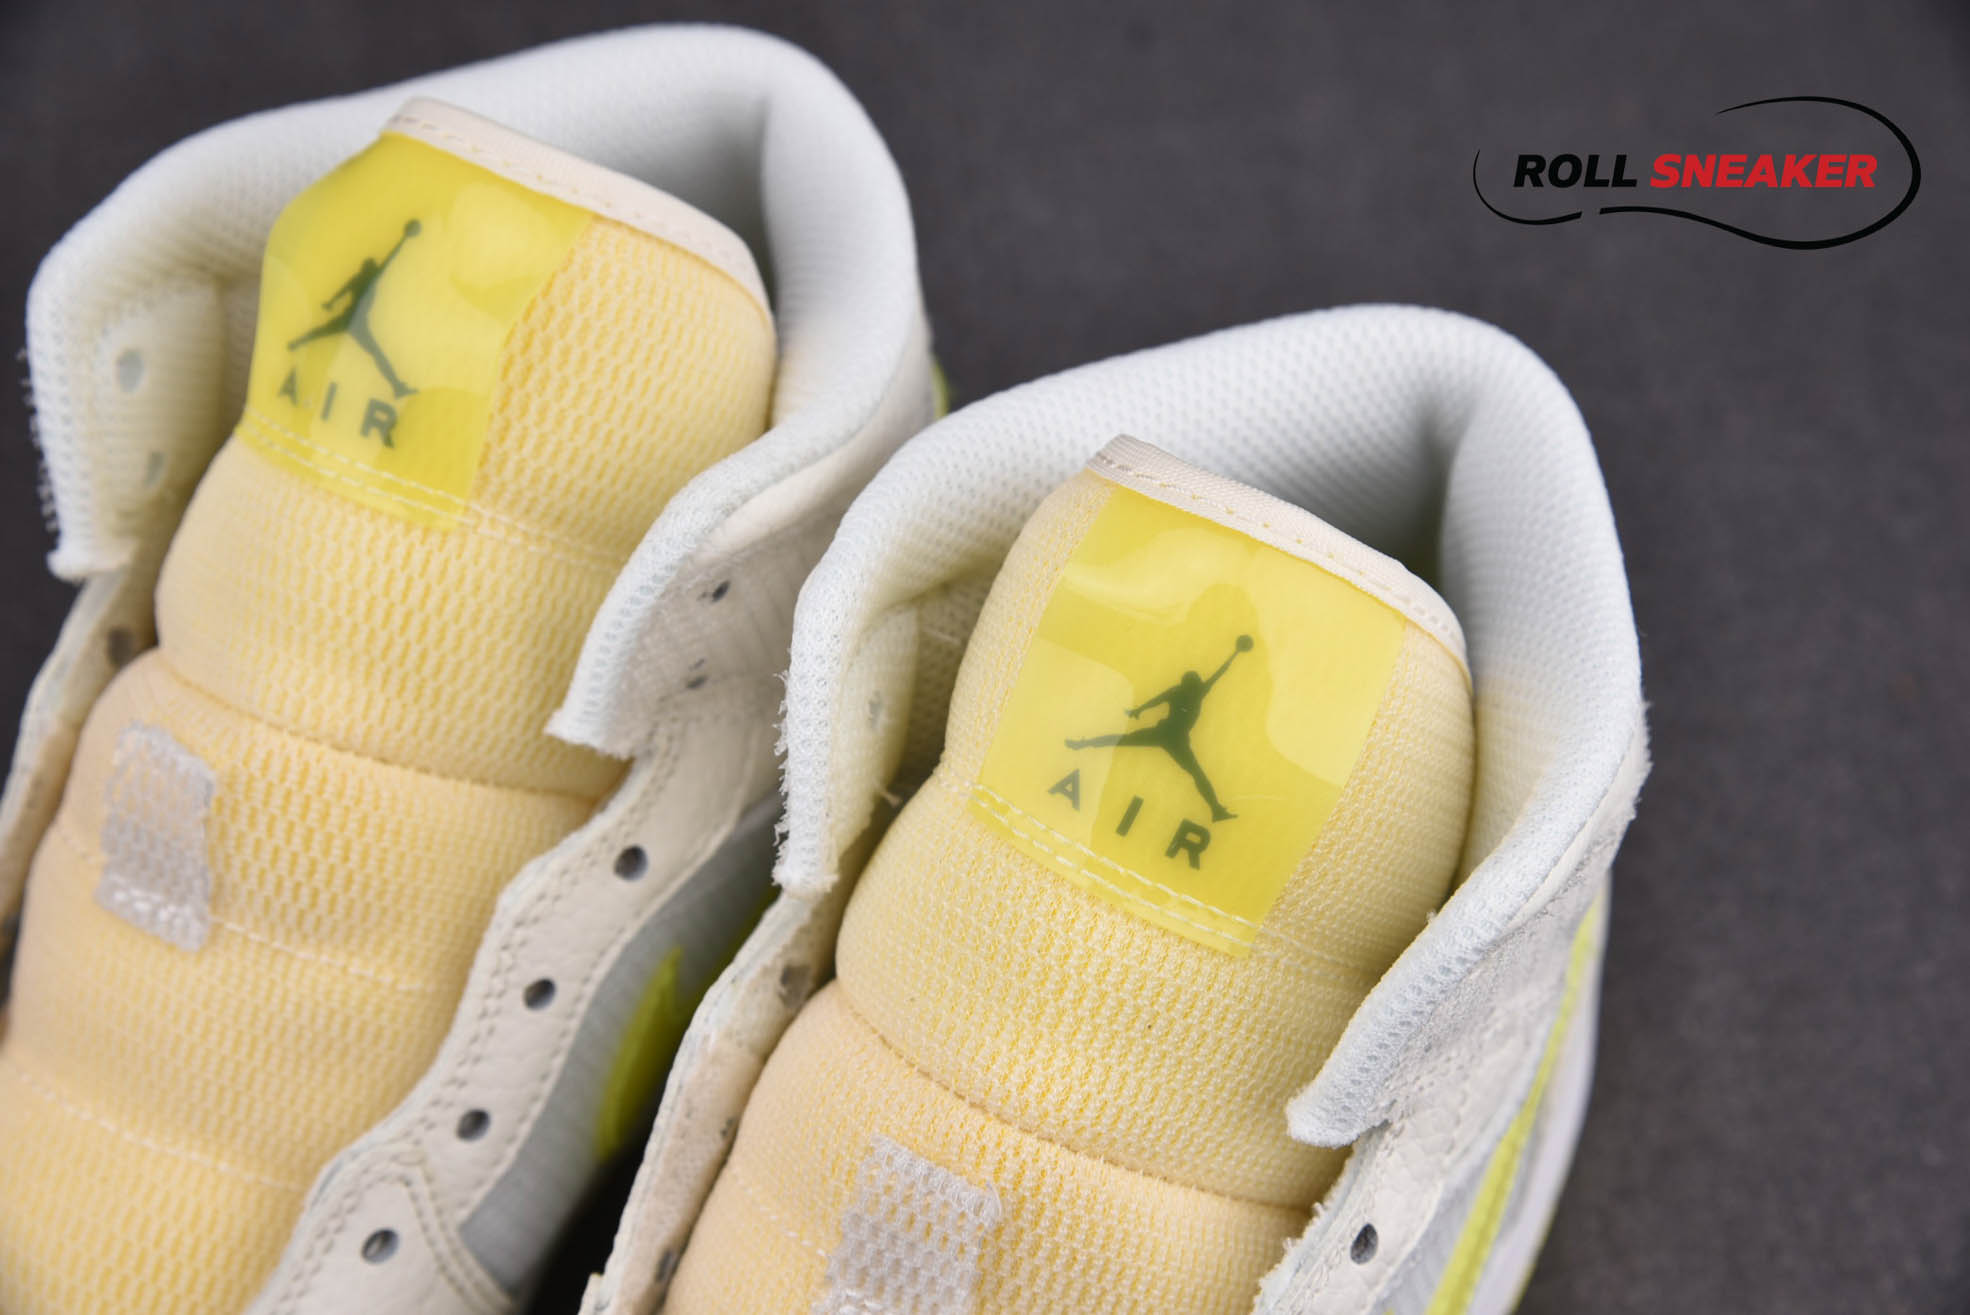 Nike Air Jordan 1 Mid Se “Yellow Voltage”
